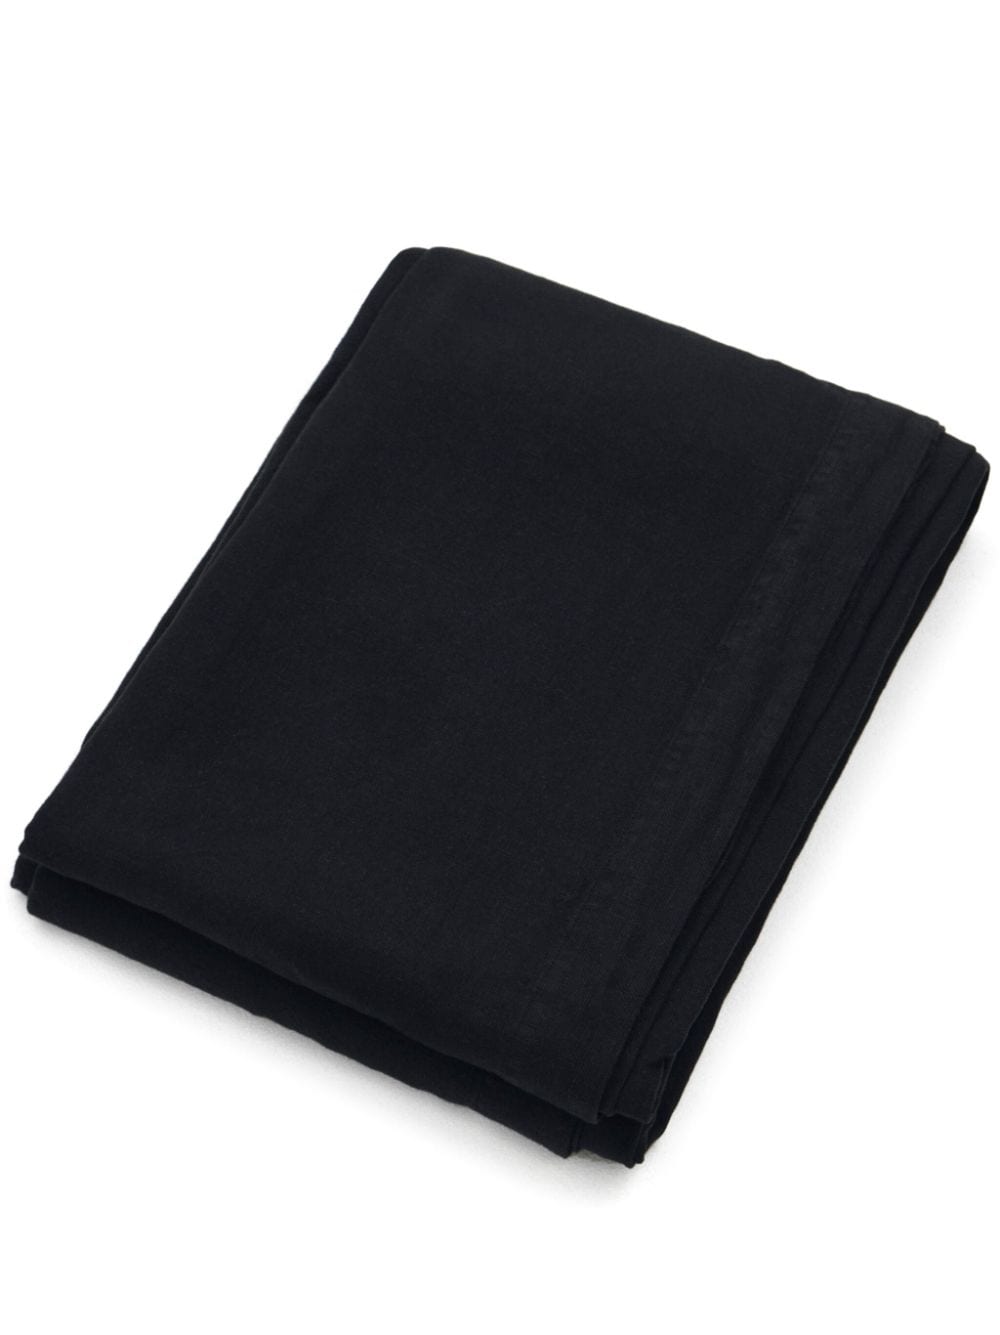 TEKLA stonewashed linen bedspread (240x260cm) - Black von TEKLA